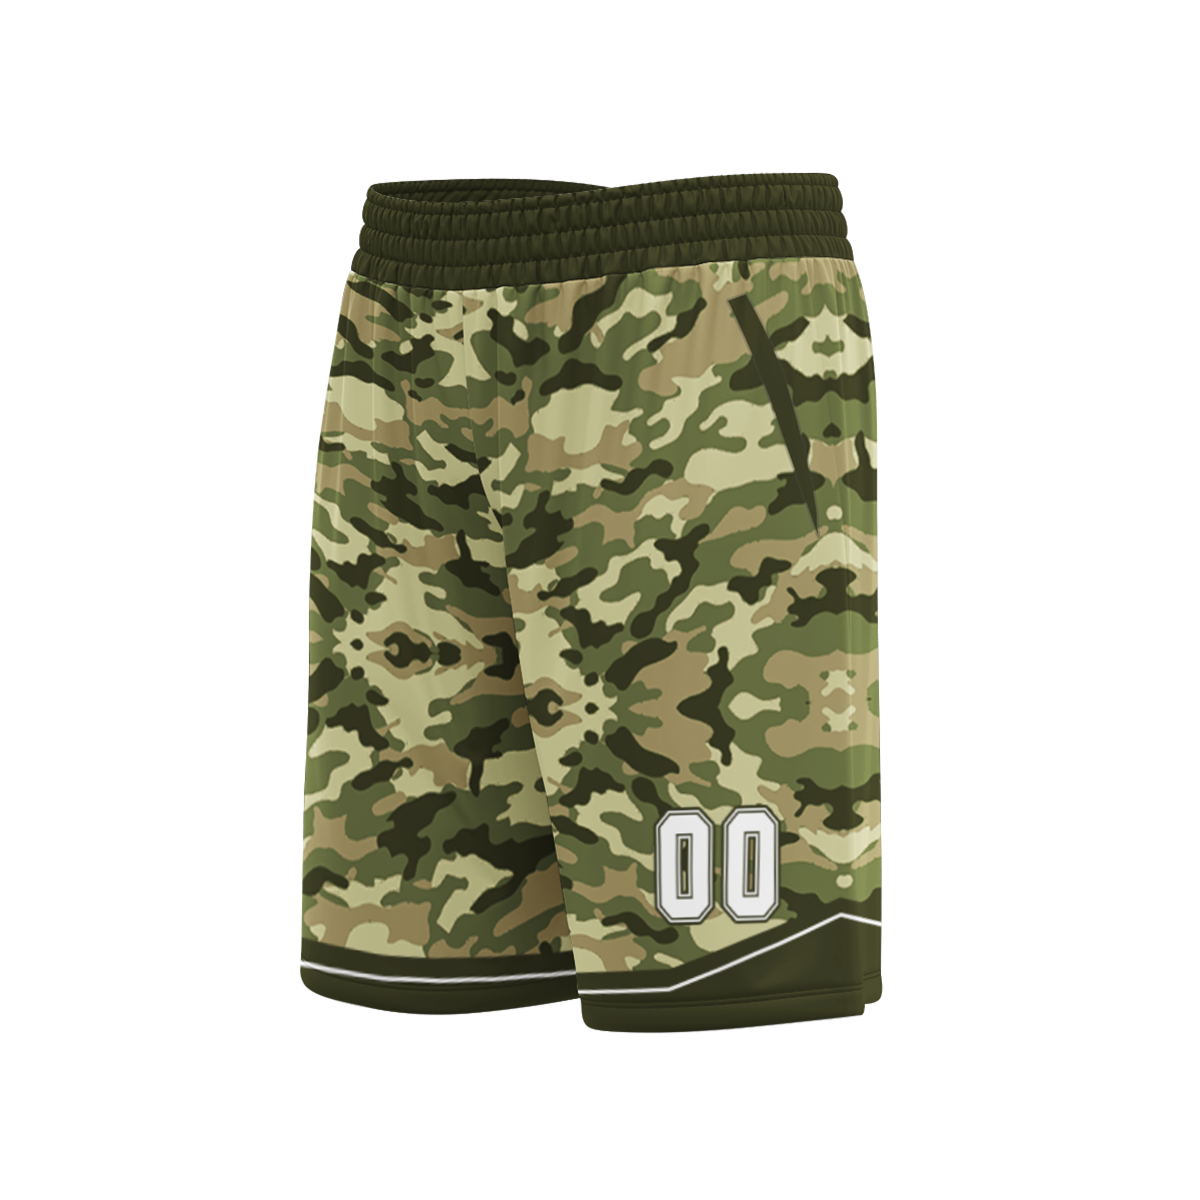 custom-your-own-team-made-basketball-jerseys-men-blank-sports-basketball-shorts-printed-basketball-wear-uniforms-at-cj-pod-8